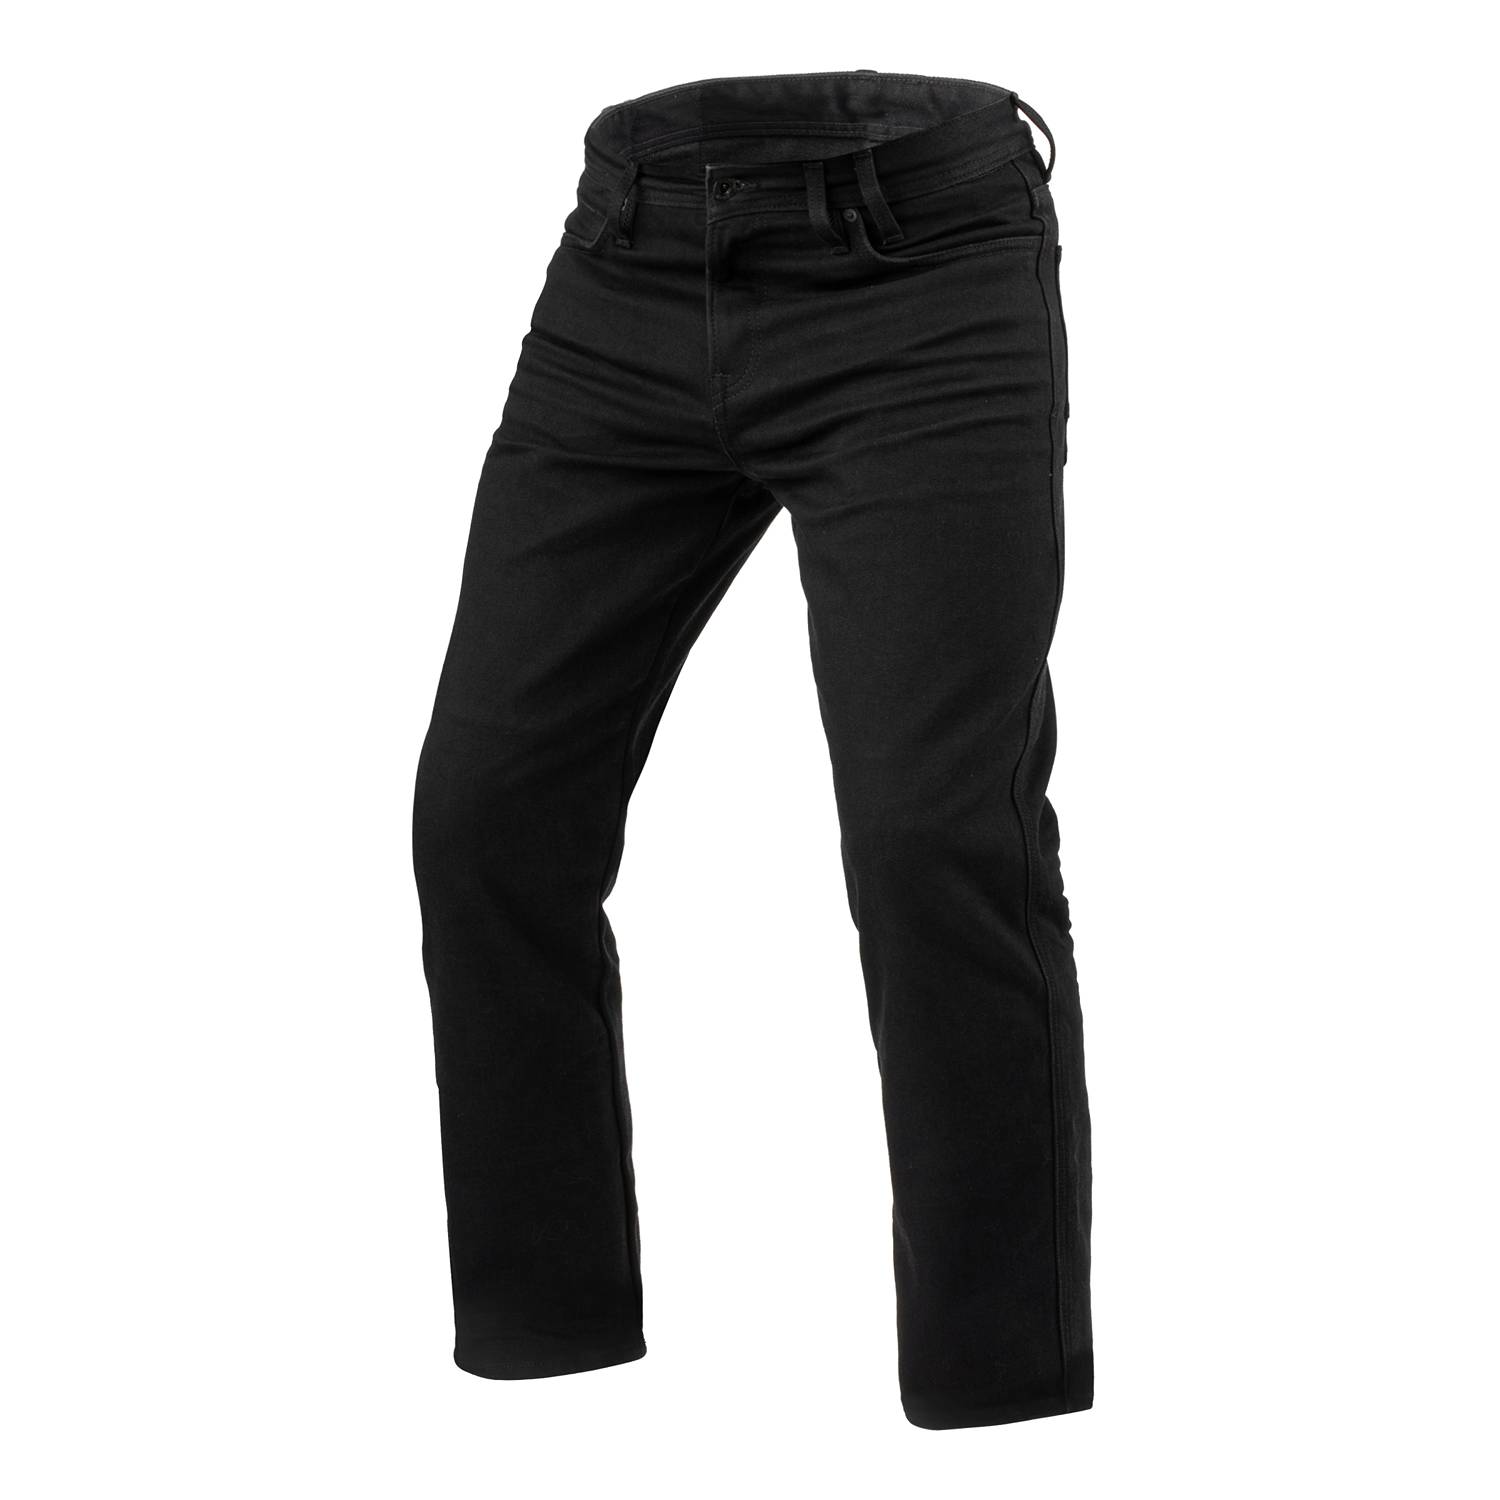 Image of REV'IT! Jeans Lombard 3 RF Black L32 Motorcycle Jeans Talla L32/W33